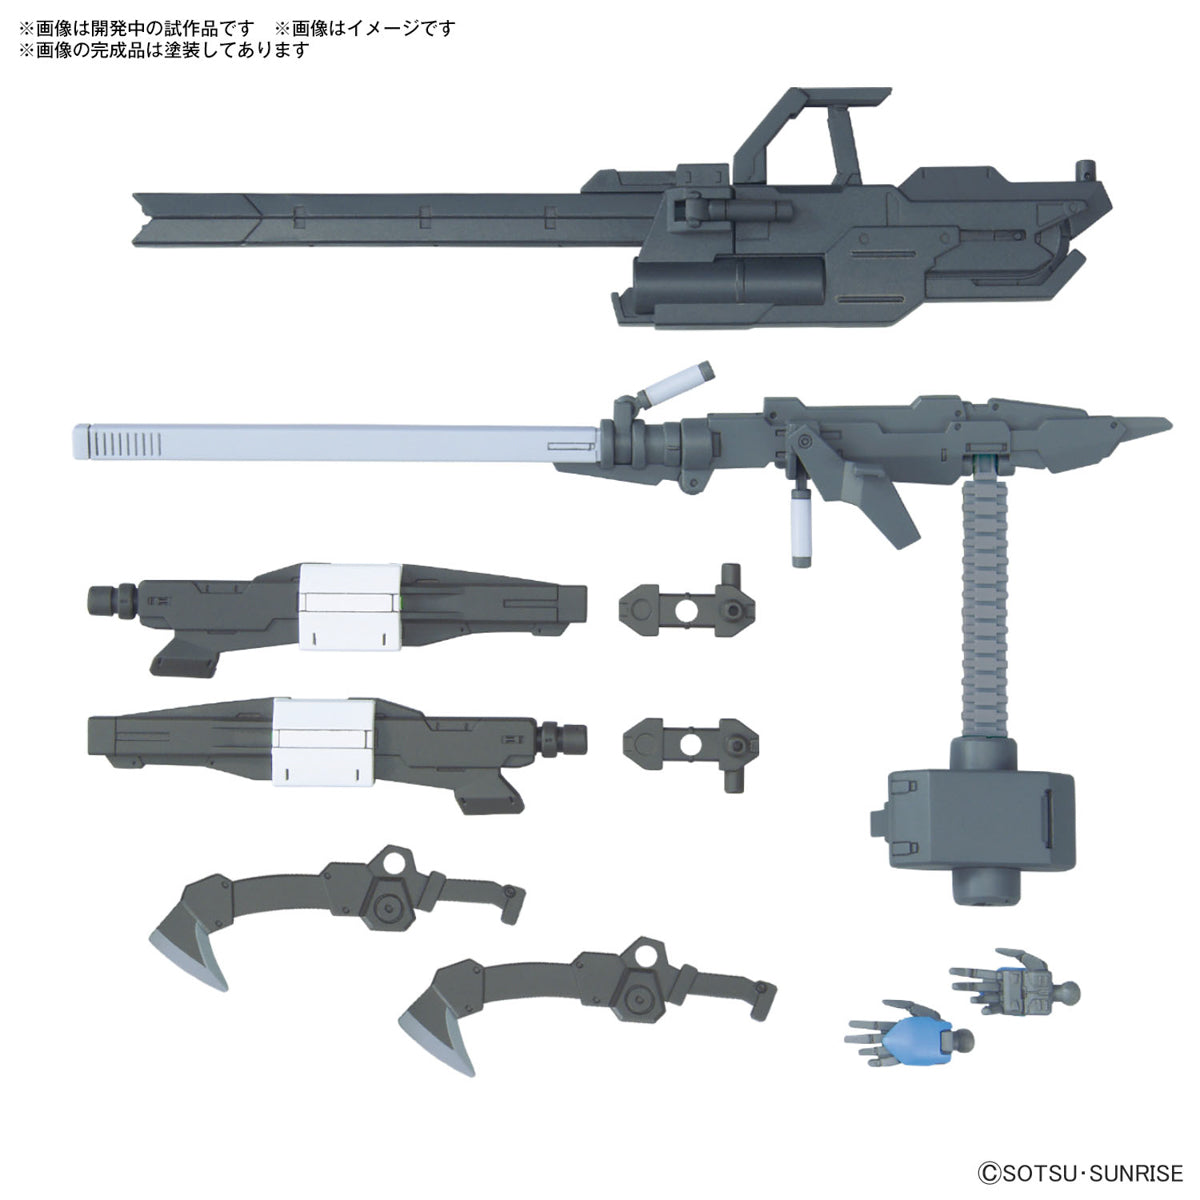 [PRE-ORDER] Gundam Option Parts Set Gunpla 12 (Large Railgun)